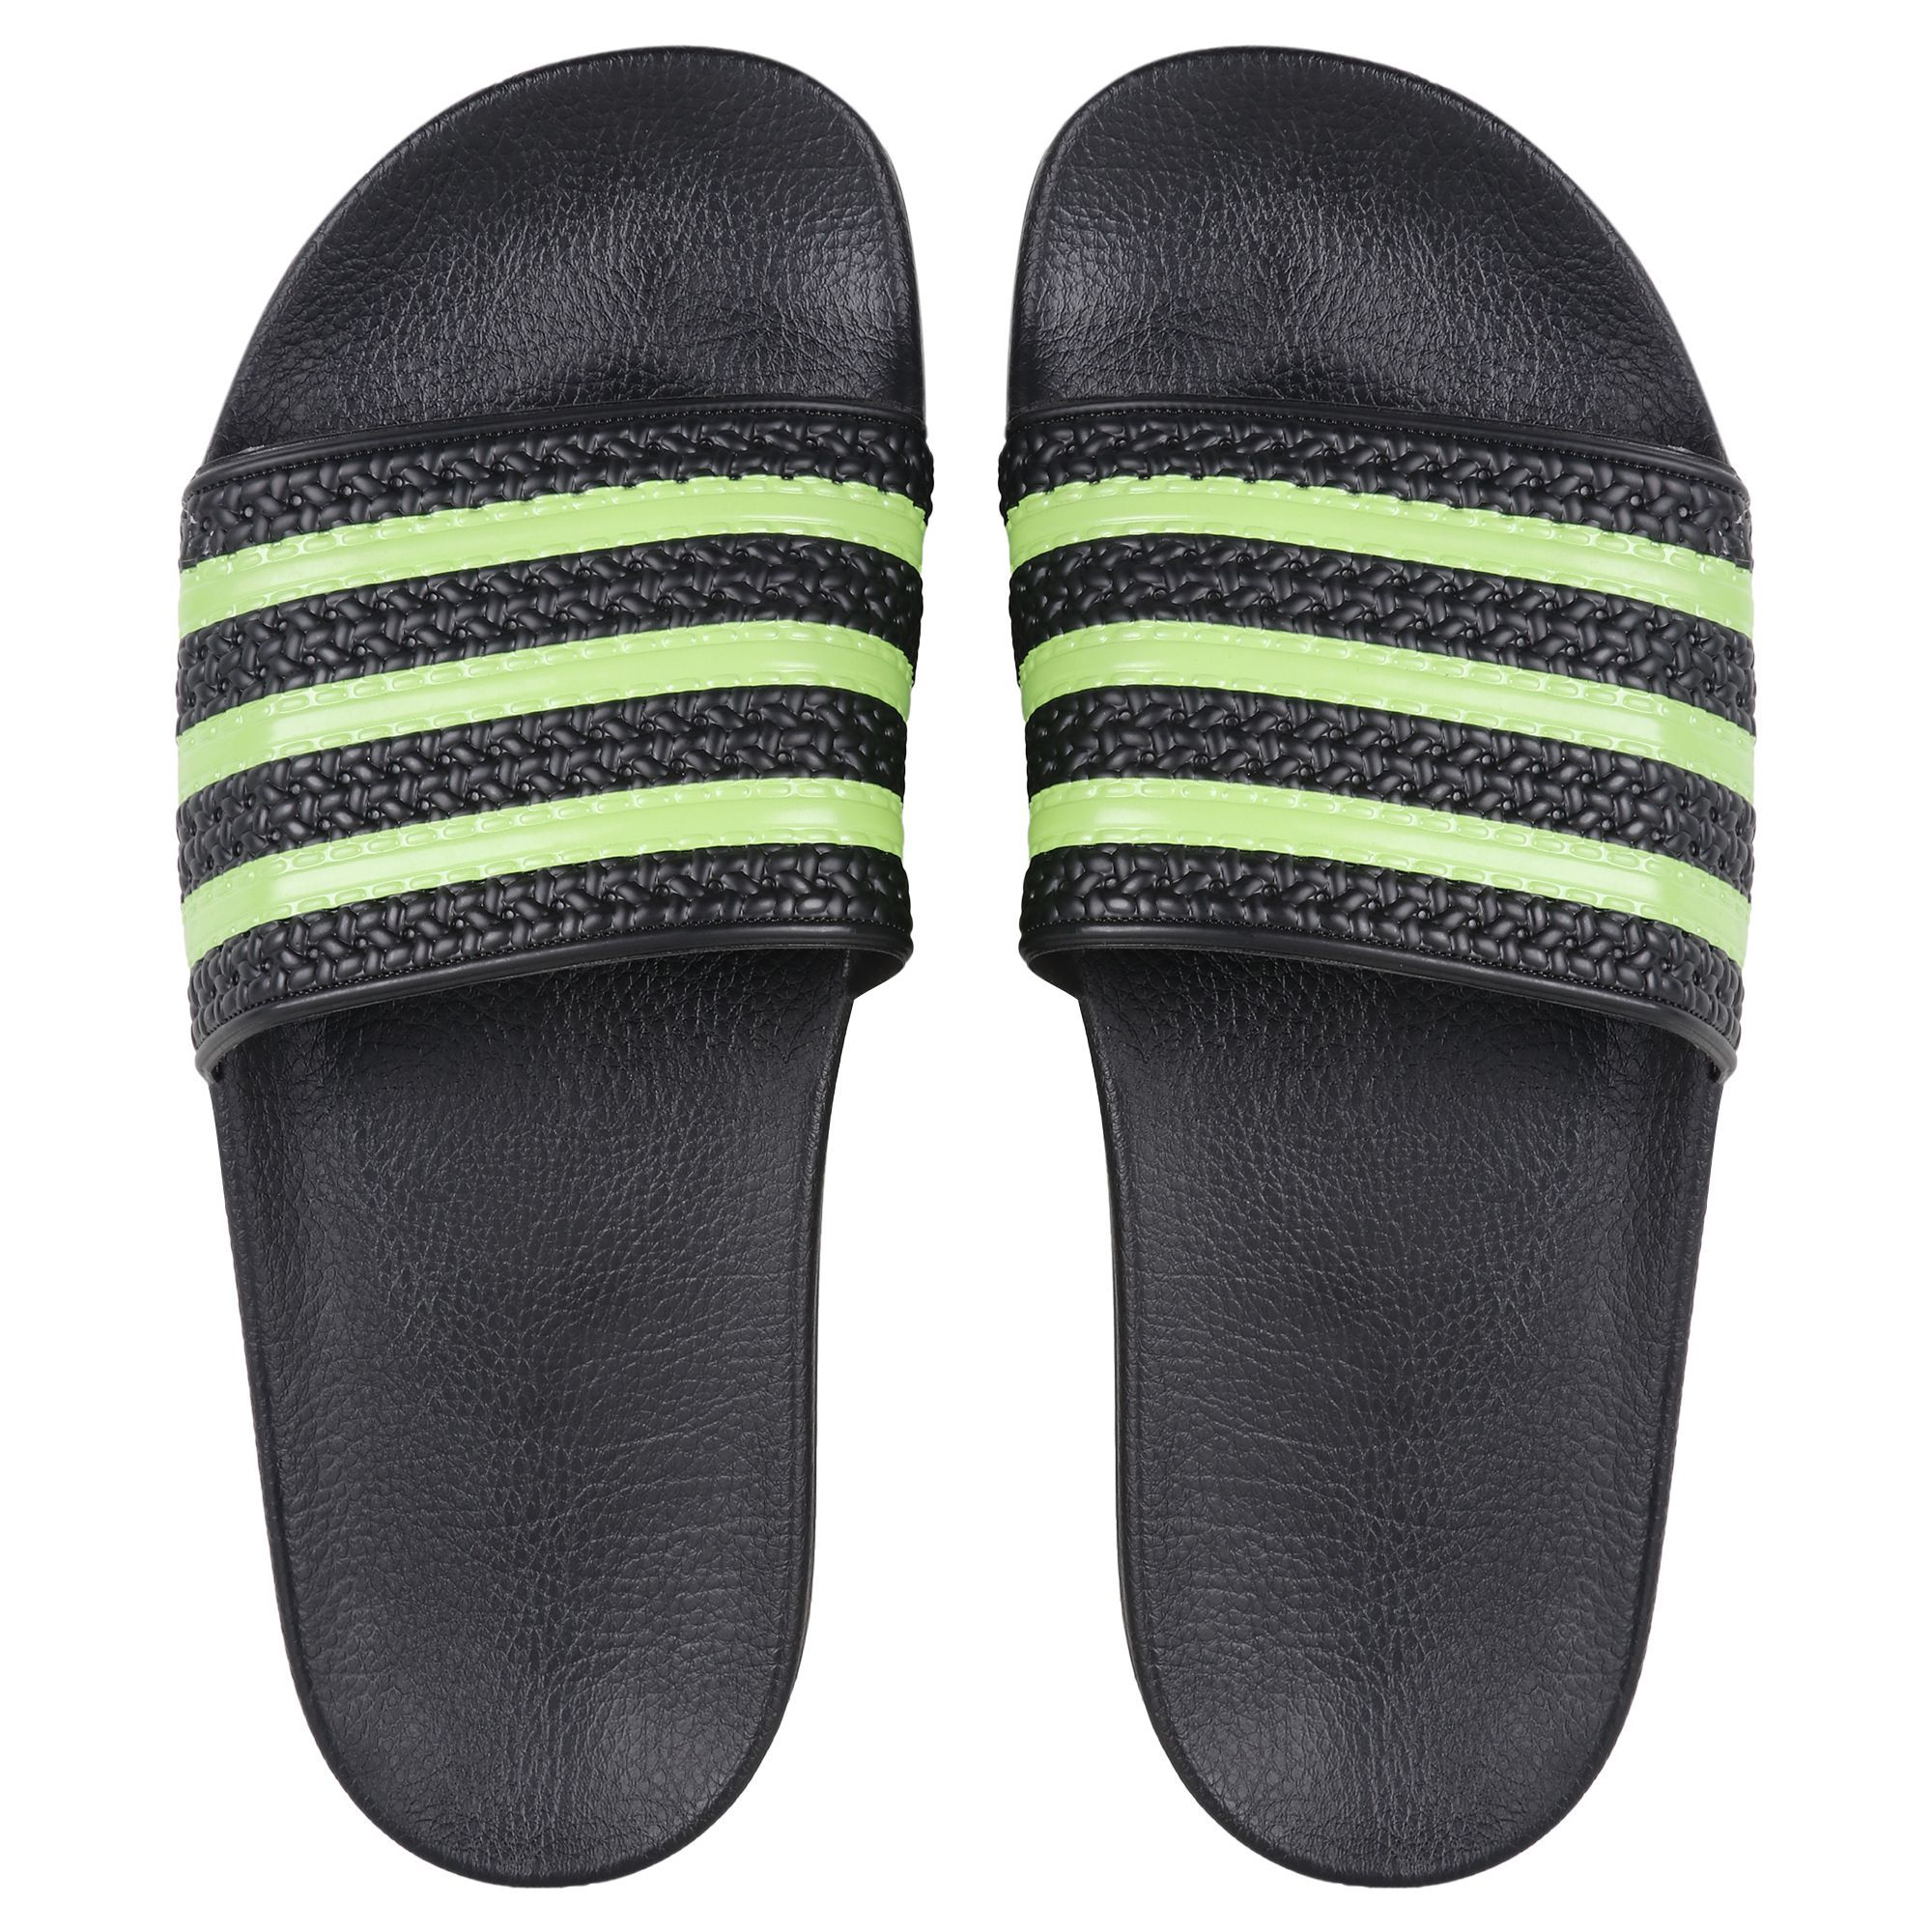 Adidas slide flip flops